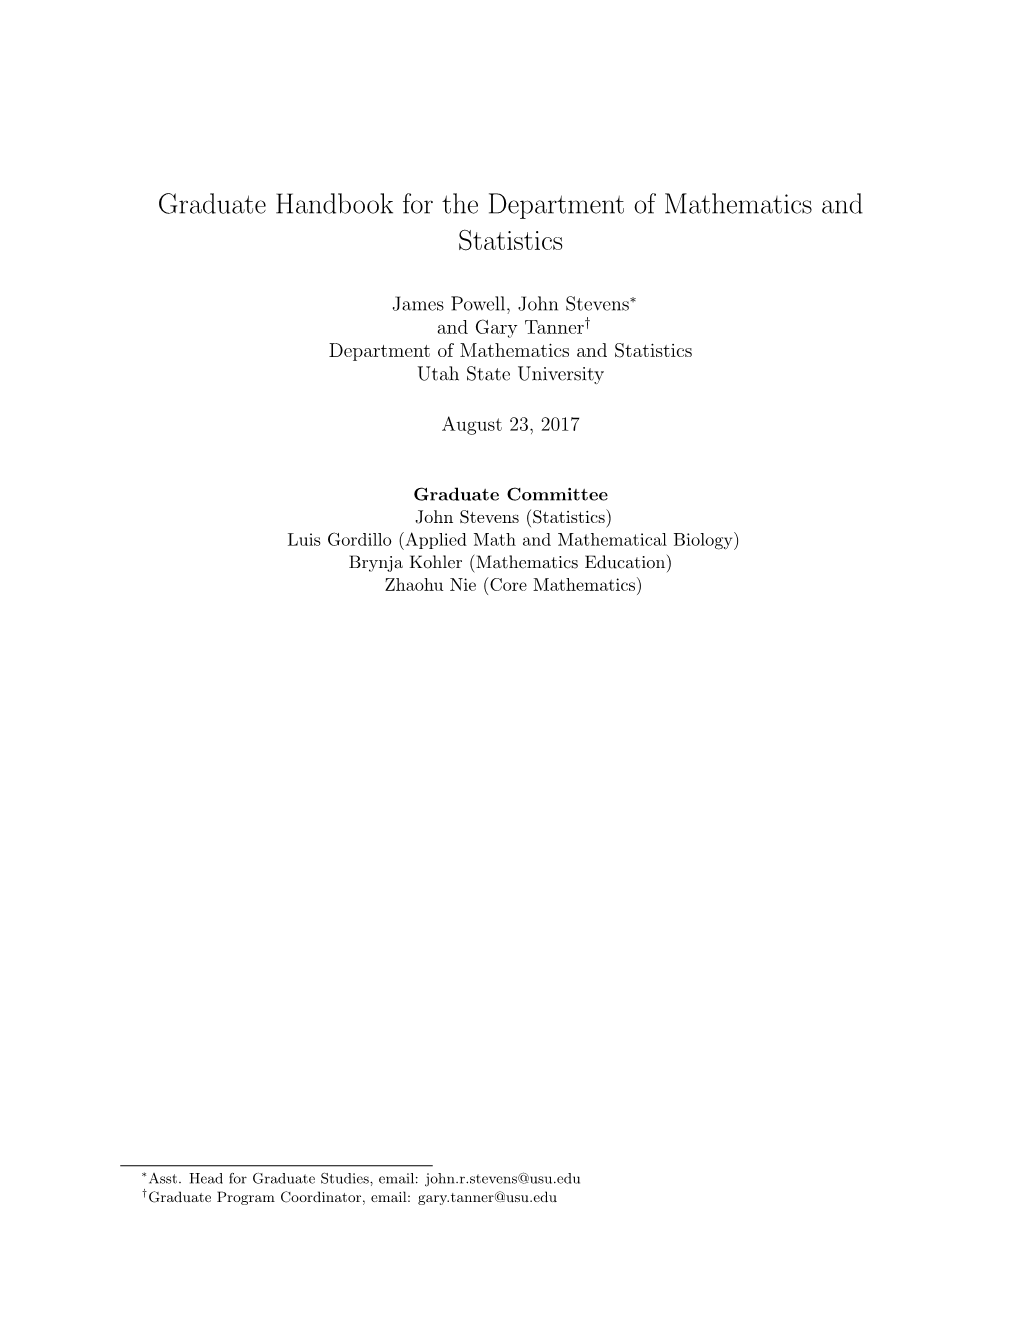 Graduate Handbook for the Department of Mathematics and Statistics